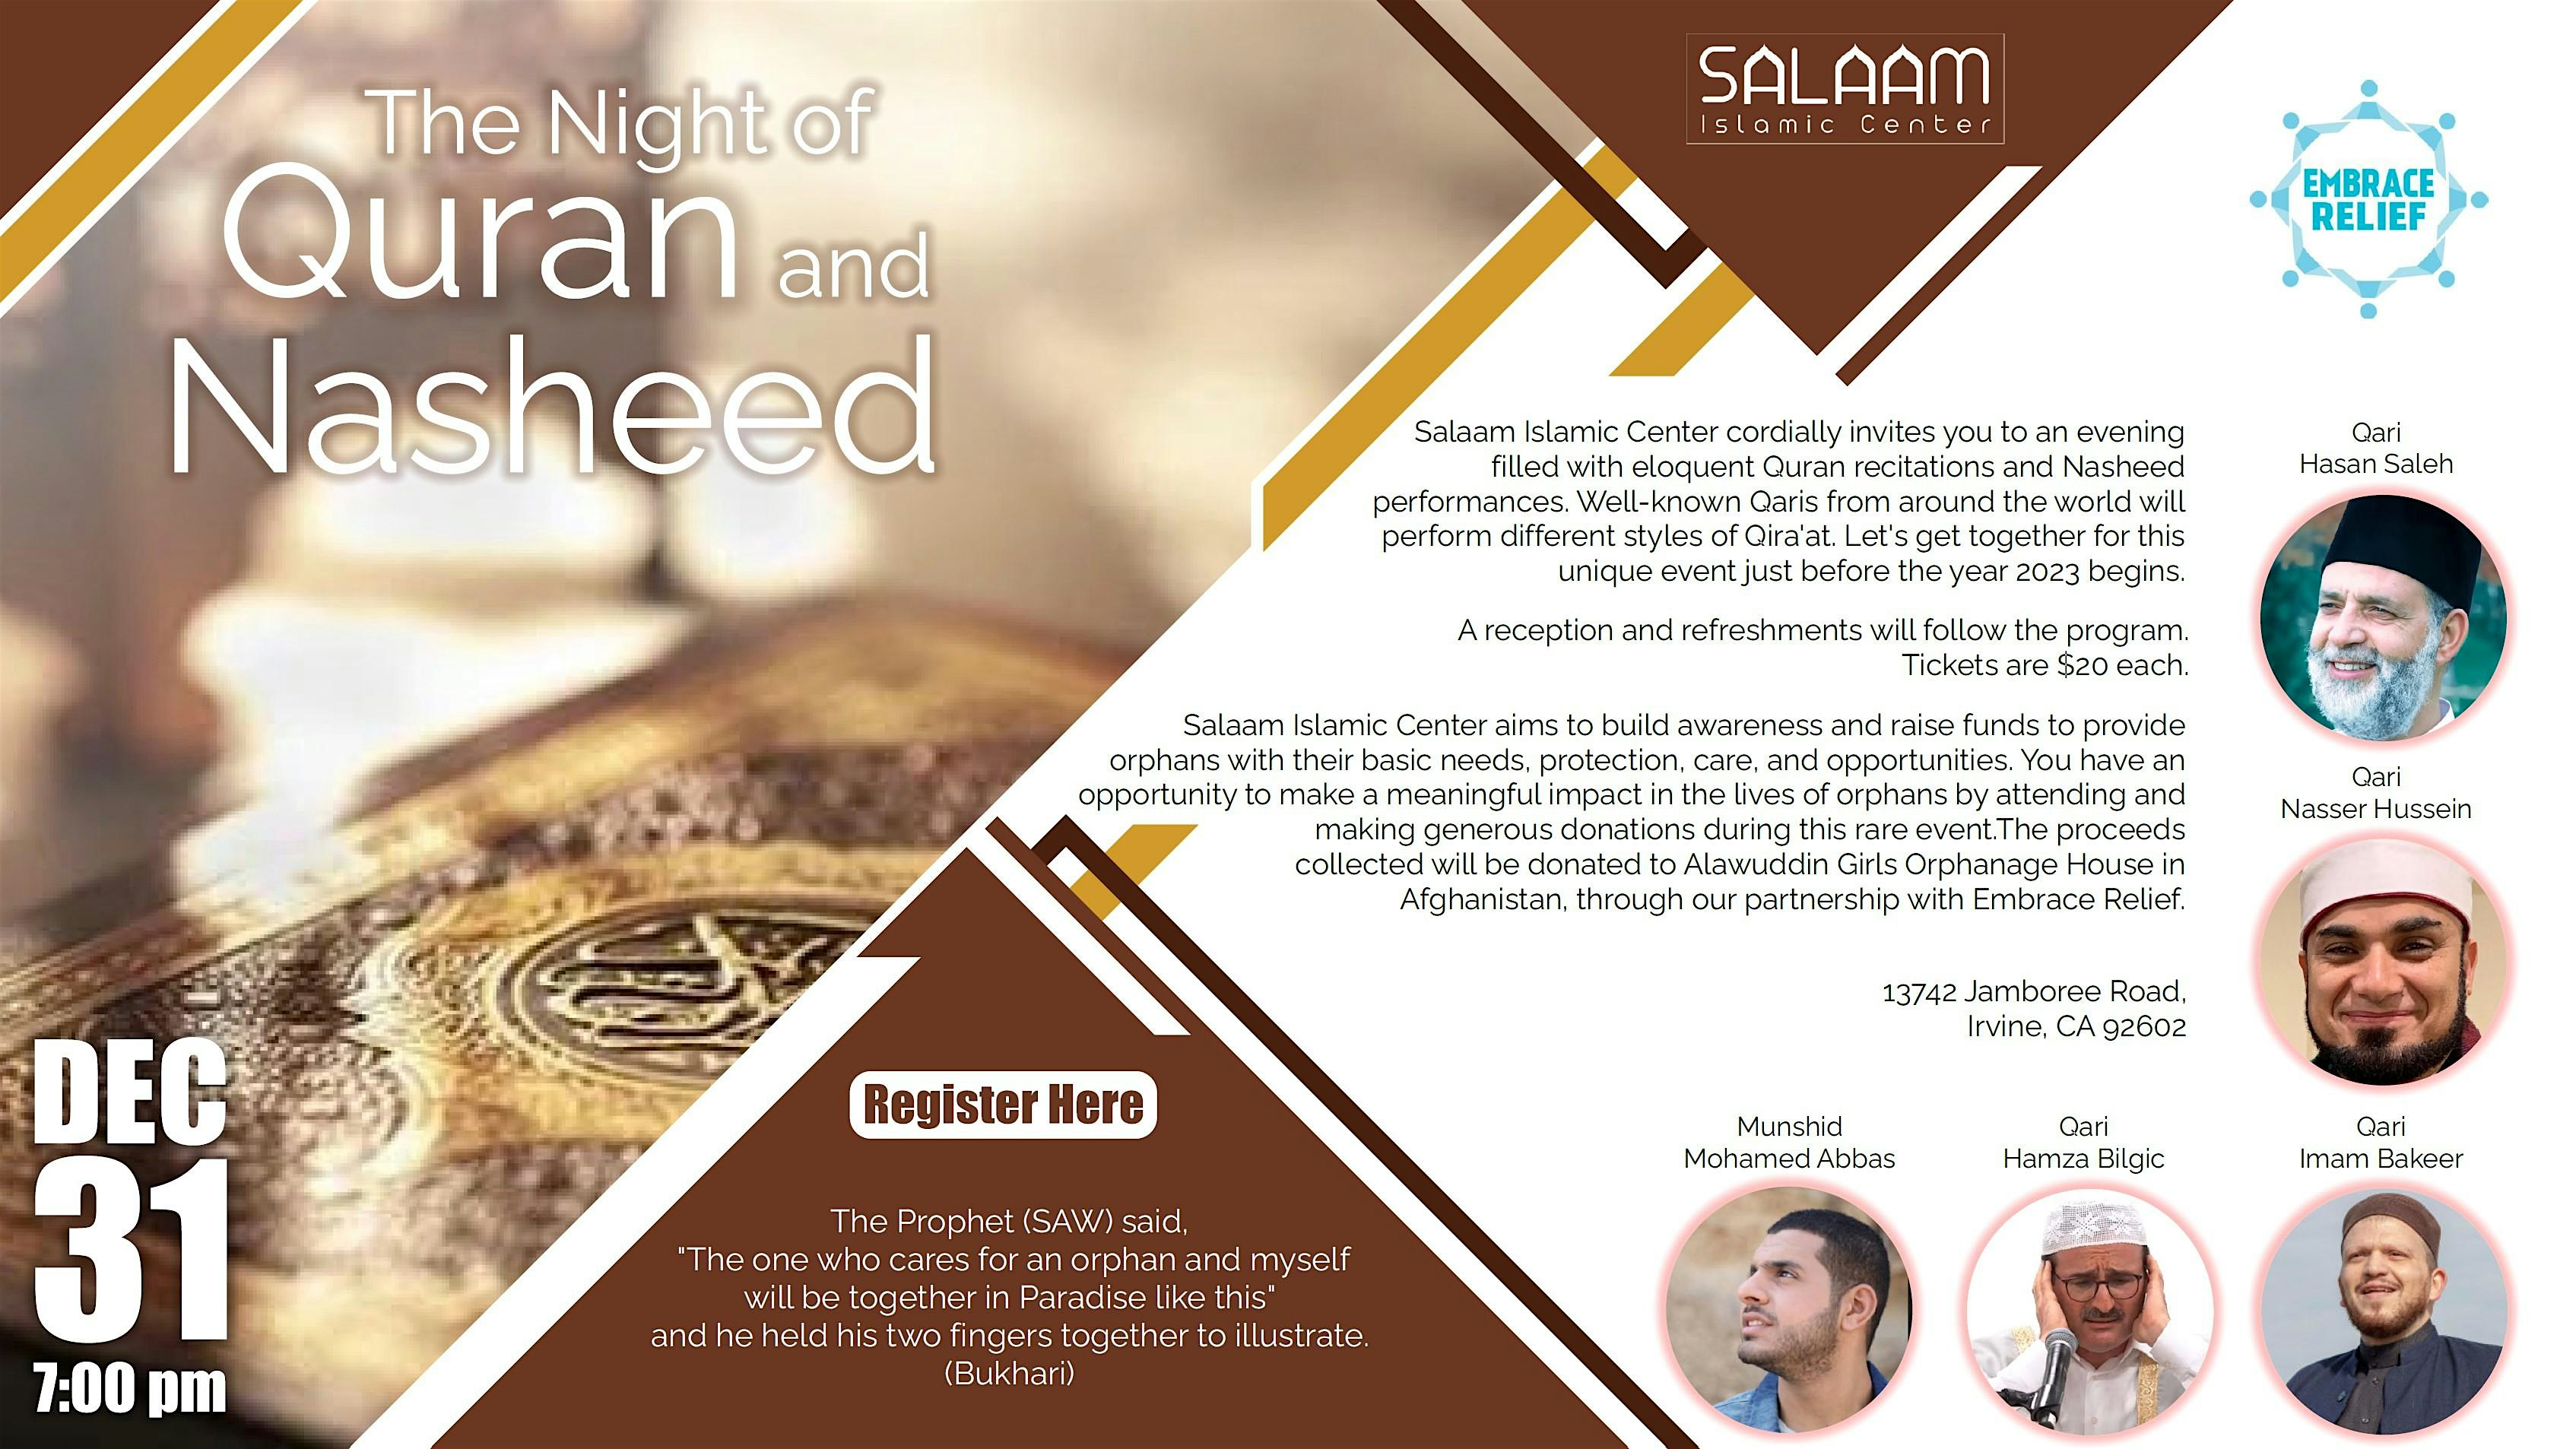 The Night of Quran and Nasheed